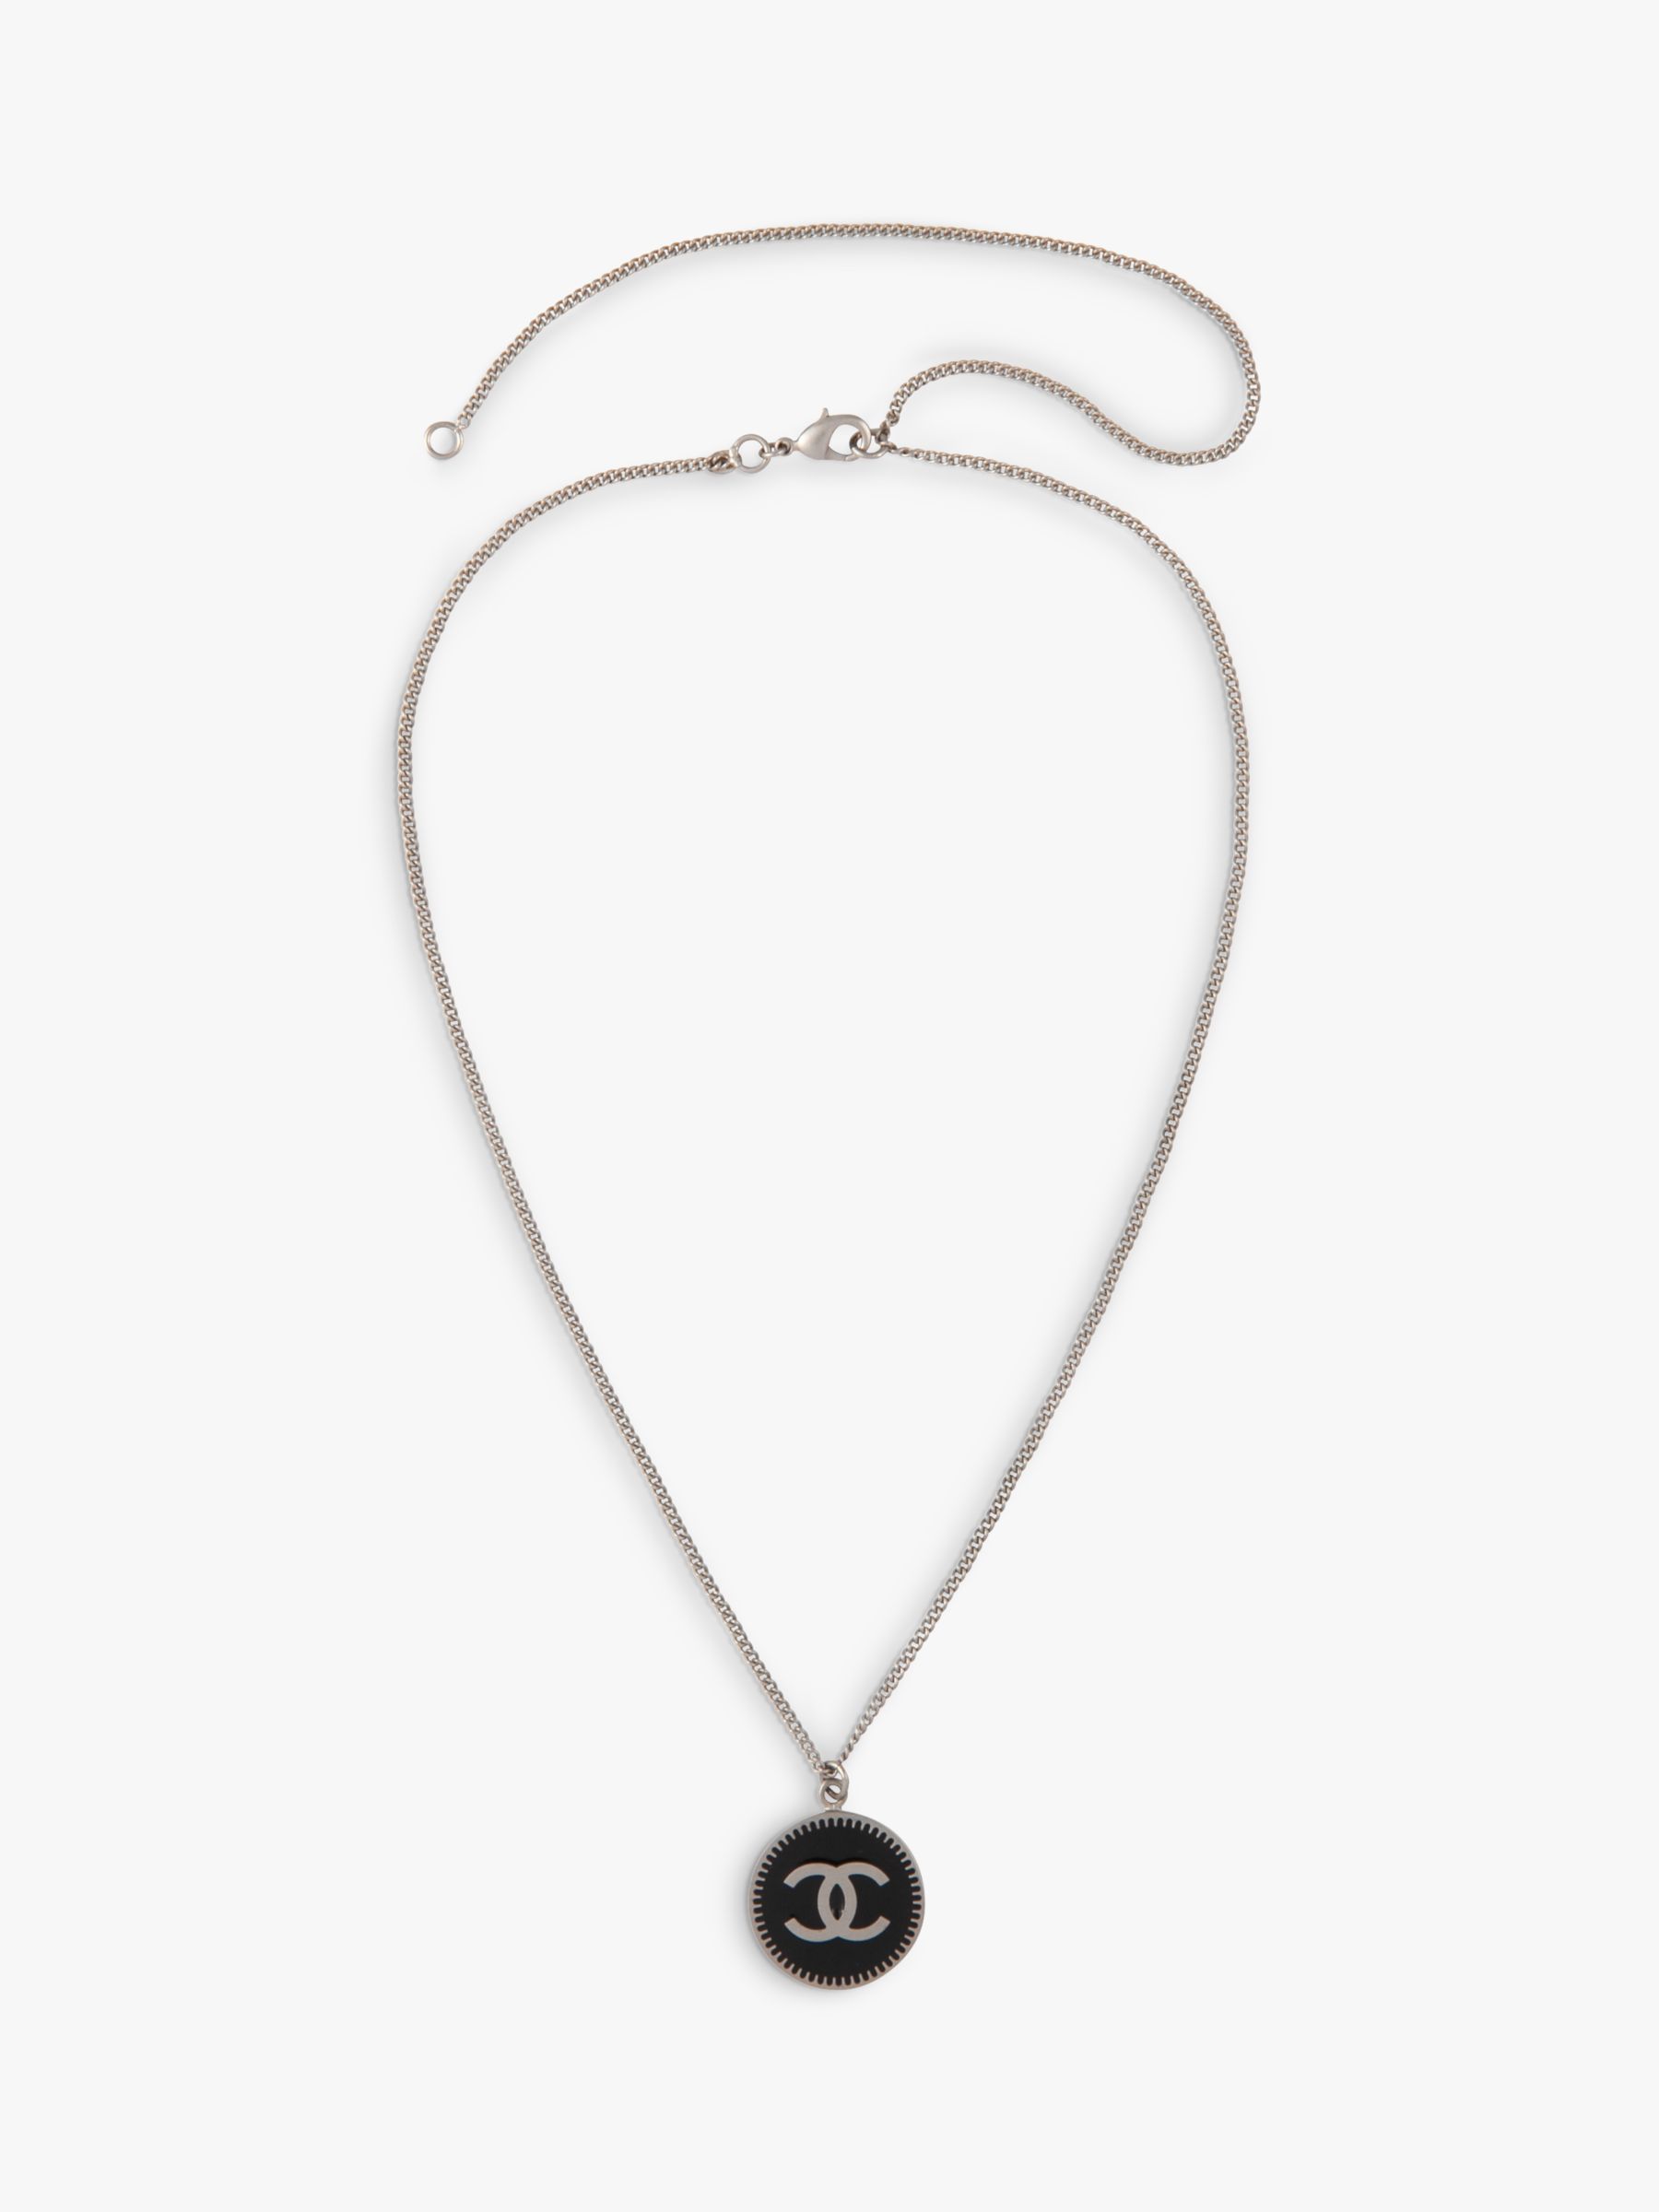 Susan Caplan Vintage Chanel Silver Plated Enamel CC Logo Pendant Necklace,  Dated 2006